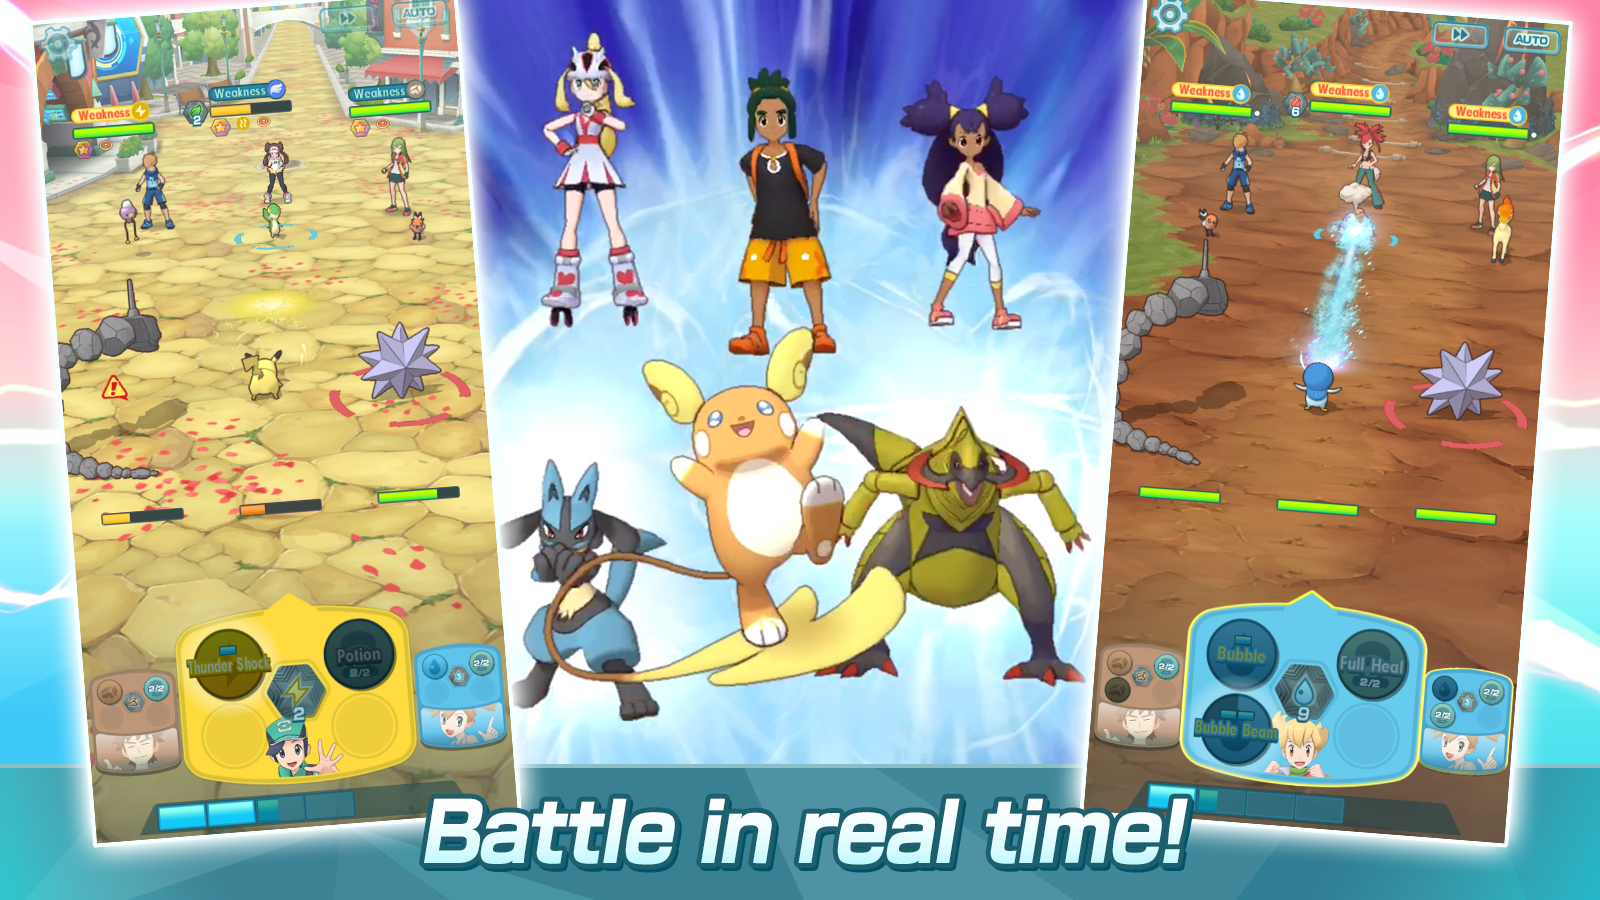 Pokémon GO: Mega Evolution has arrived! 